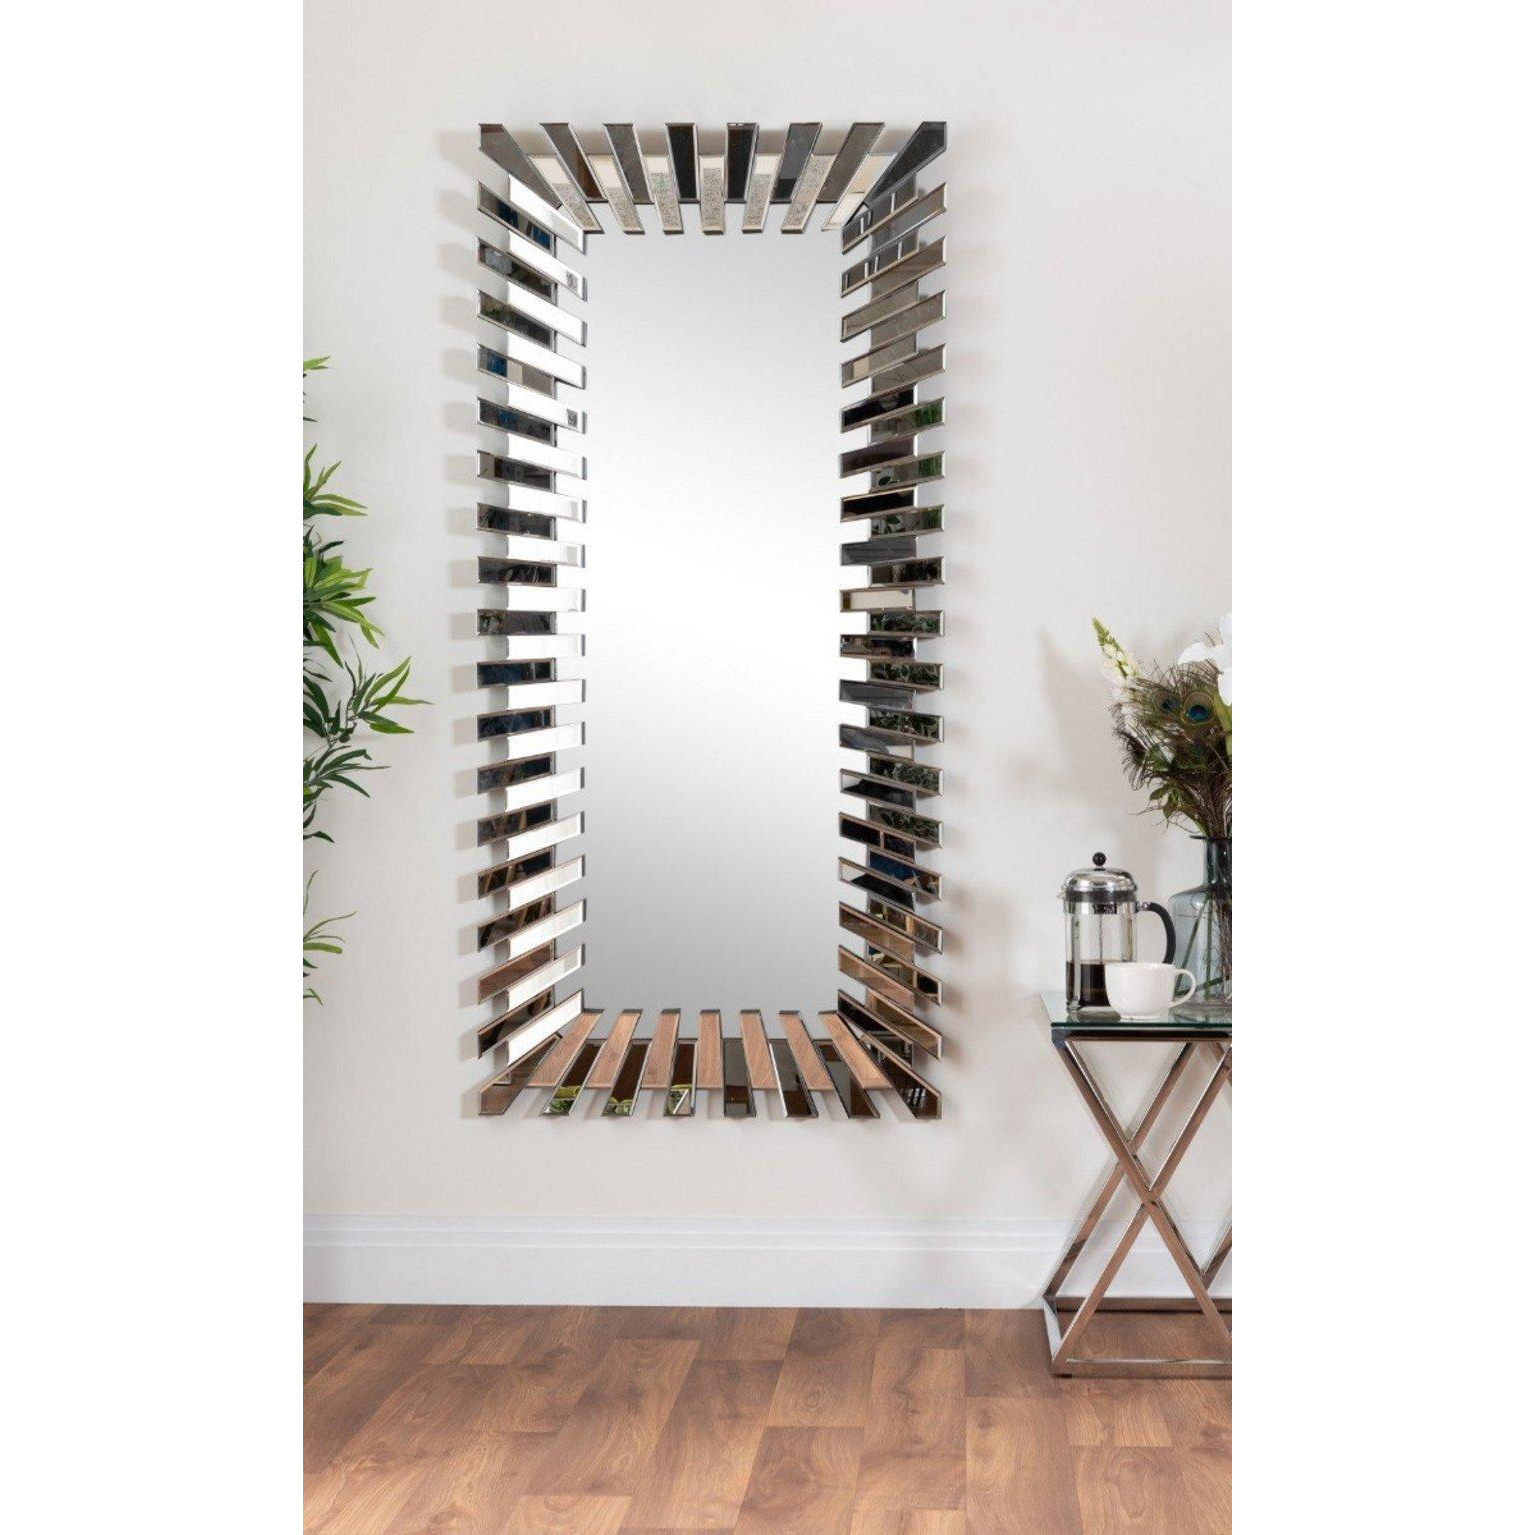 Starburst Large 170cm x 80cm 3D Silver Rectangular Sunburst Modern Hallway Bedroom Dining And Living Room Mirror - image 1